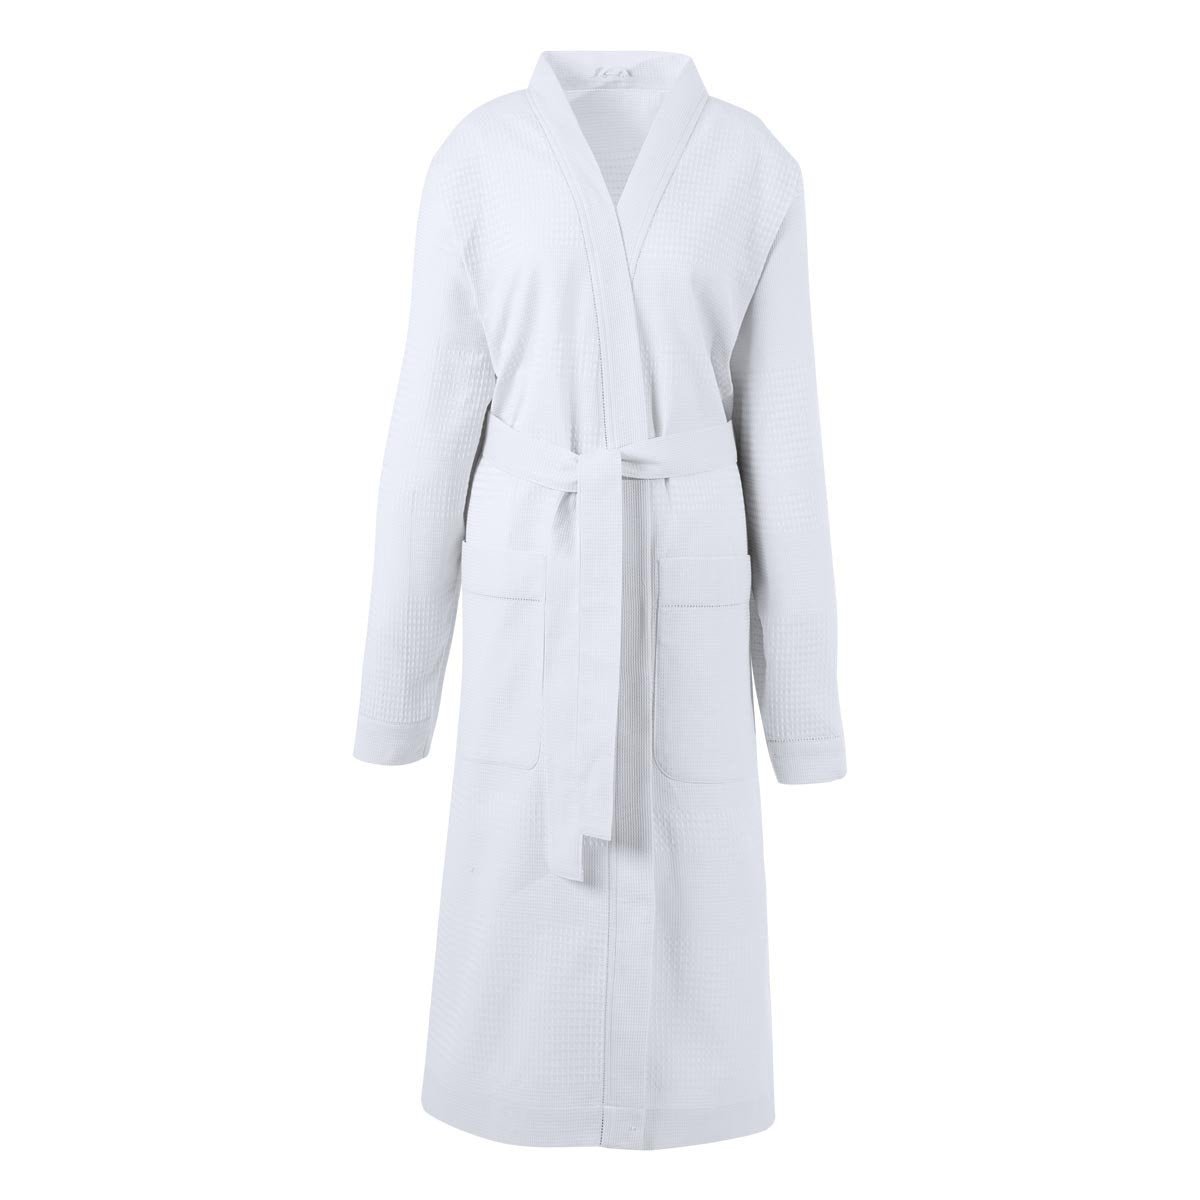 Volupte White Bathrobe by Le Jacquard Français | Fig Linens - Bath robe with pockets and belt